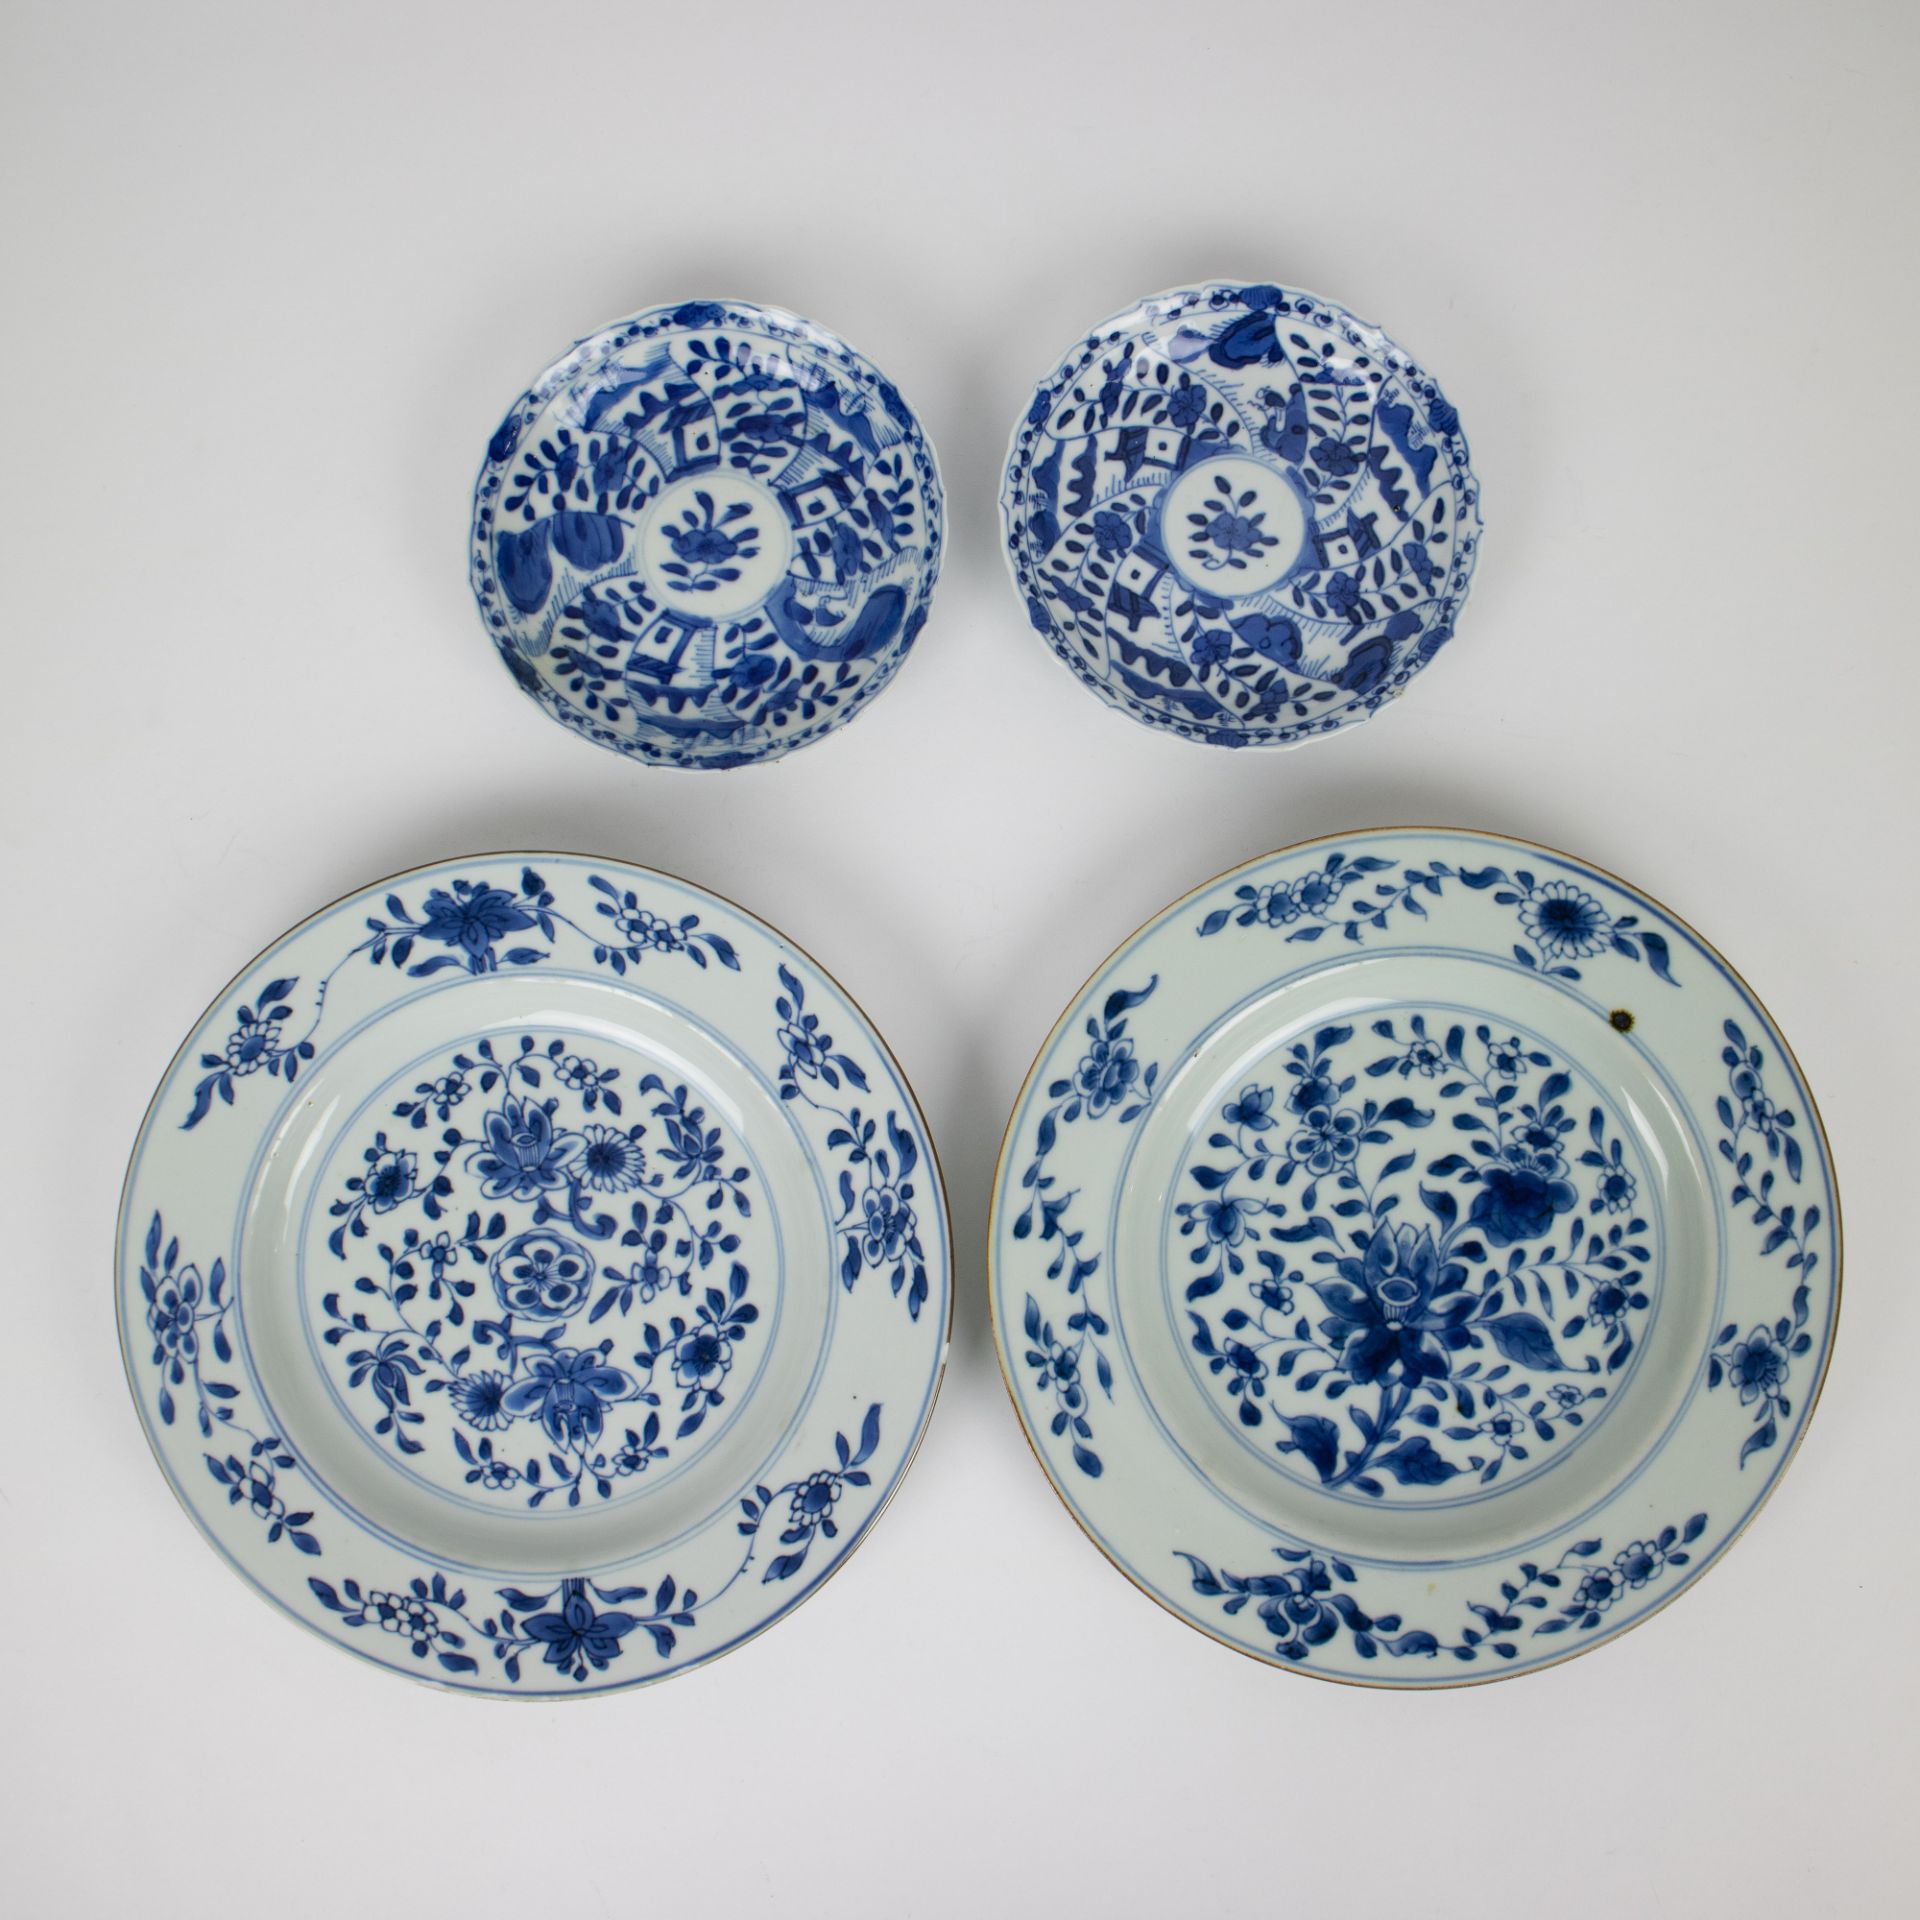 2 plates and 2 small bowls, Kangxi